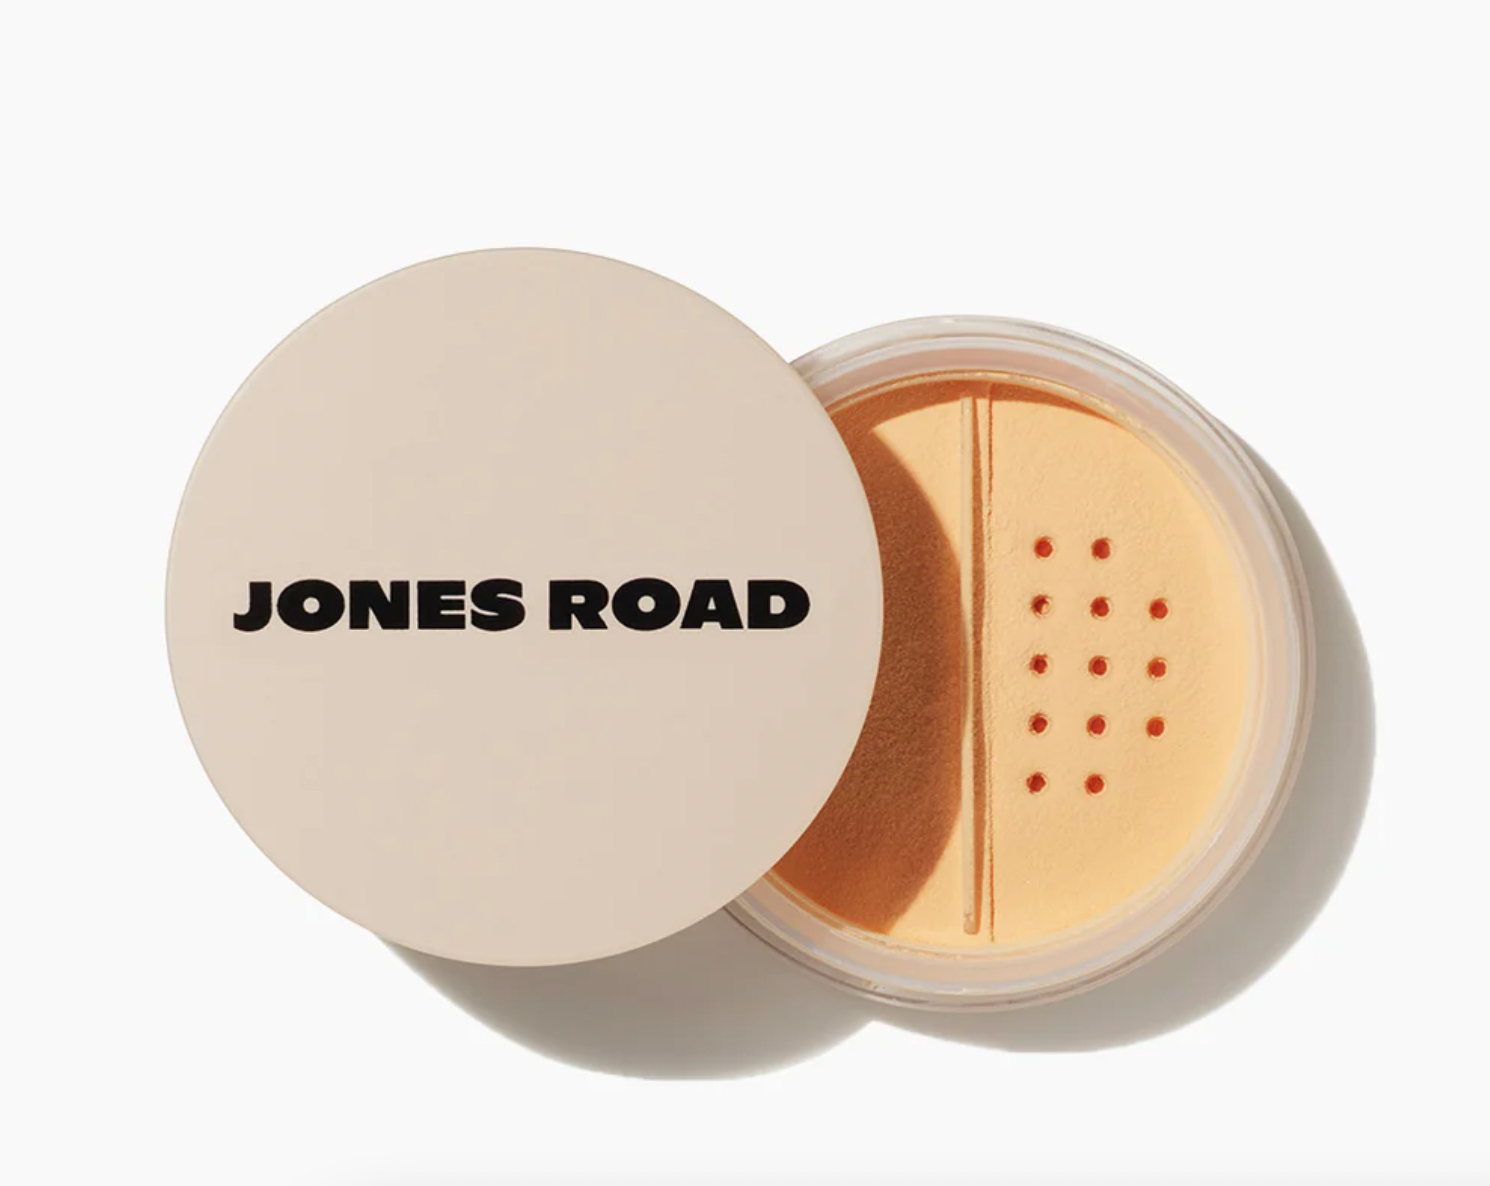 Jones Road tinted face powder